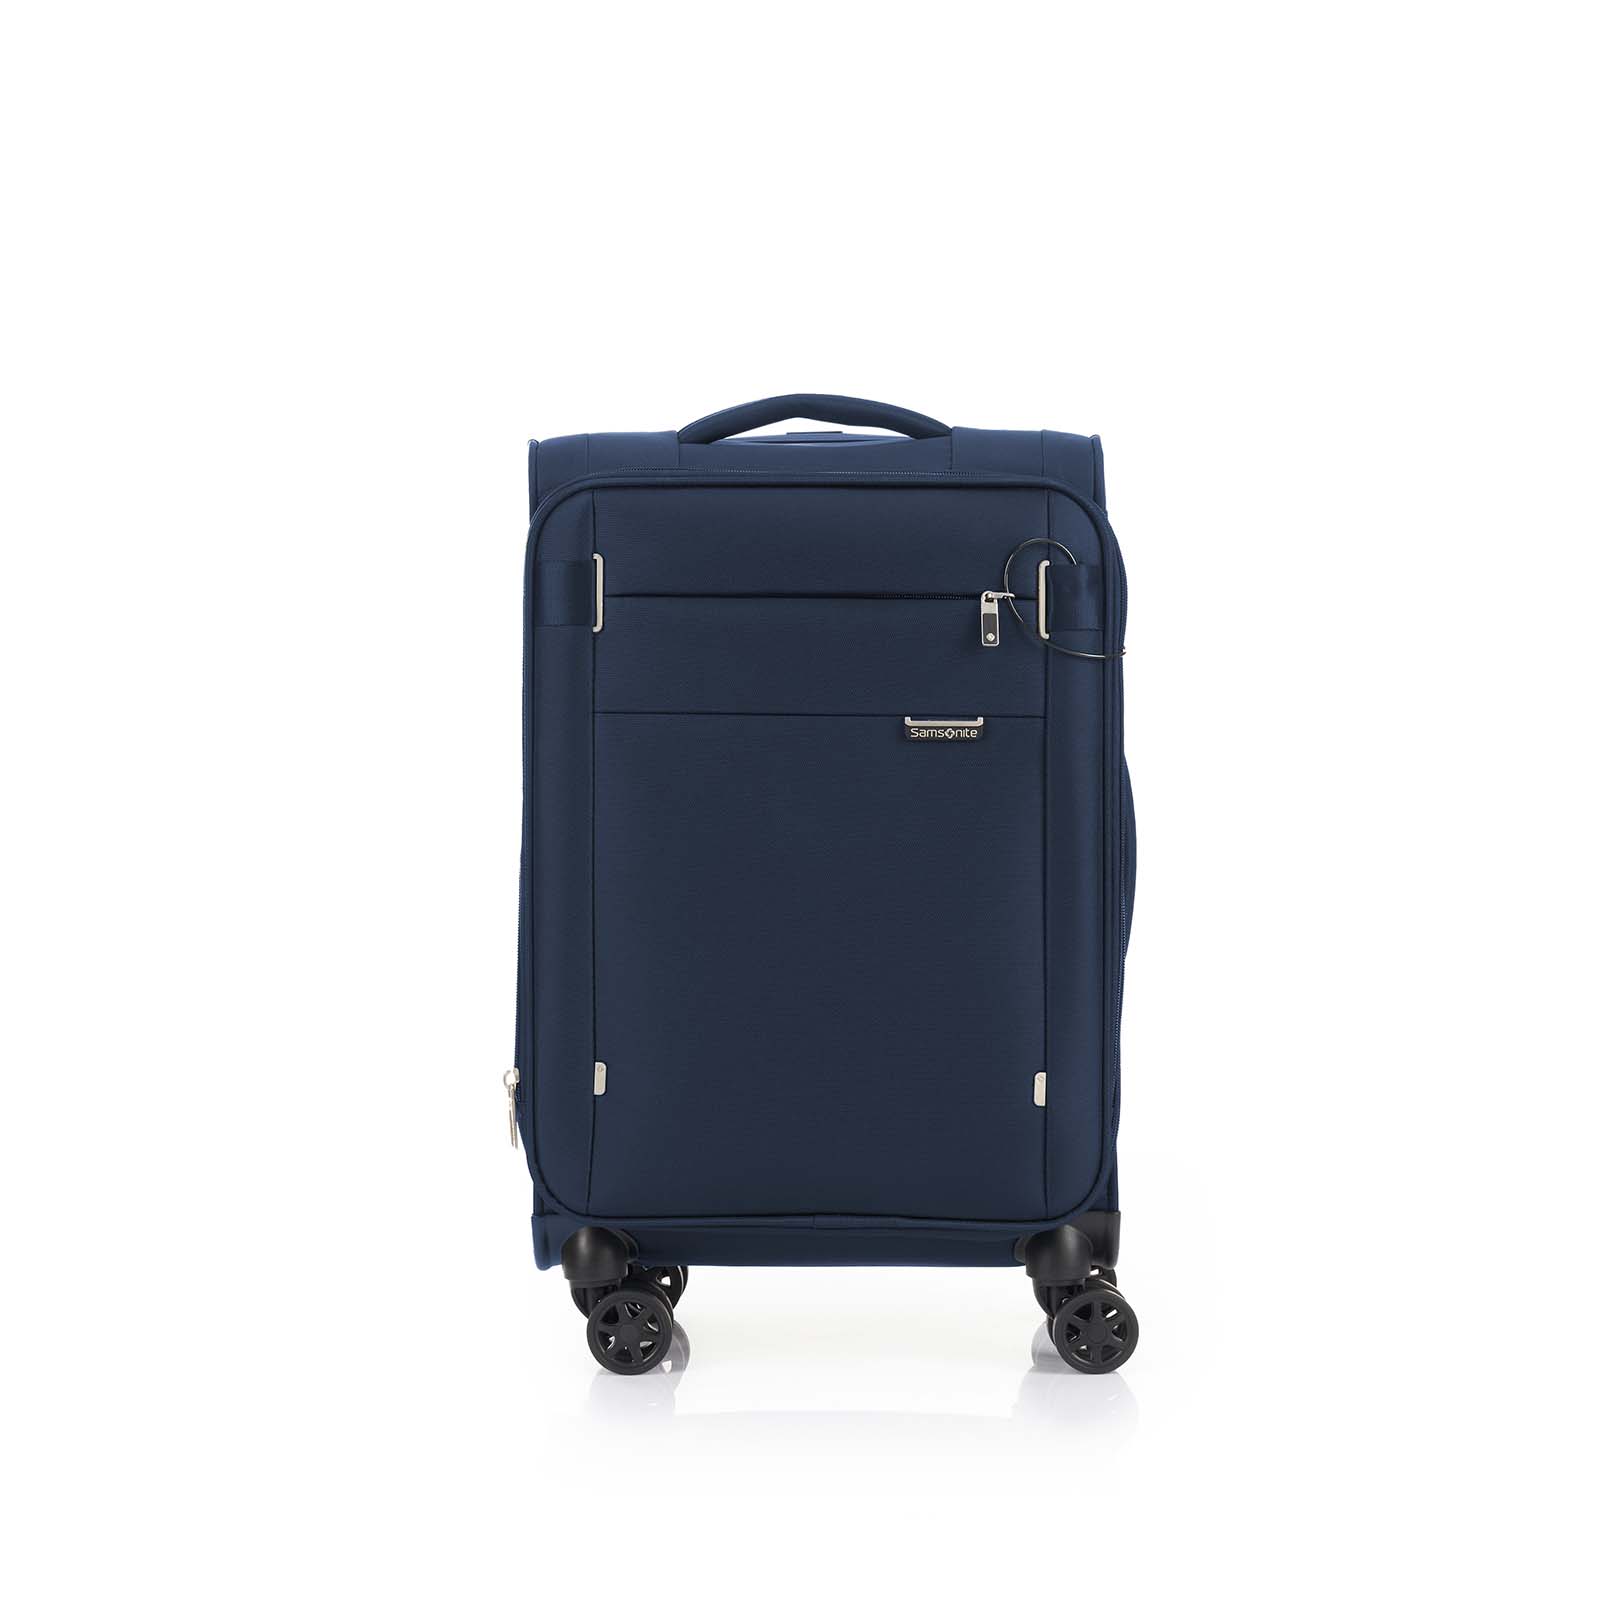 Samsonite-City-Rhythm-Carry-On-55cm-Suitcase-Navy-Front